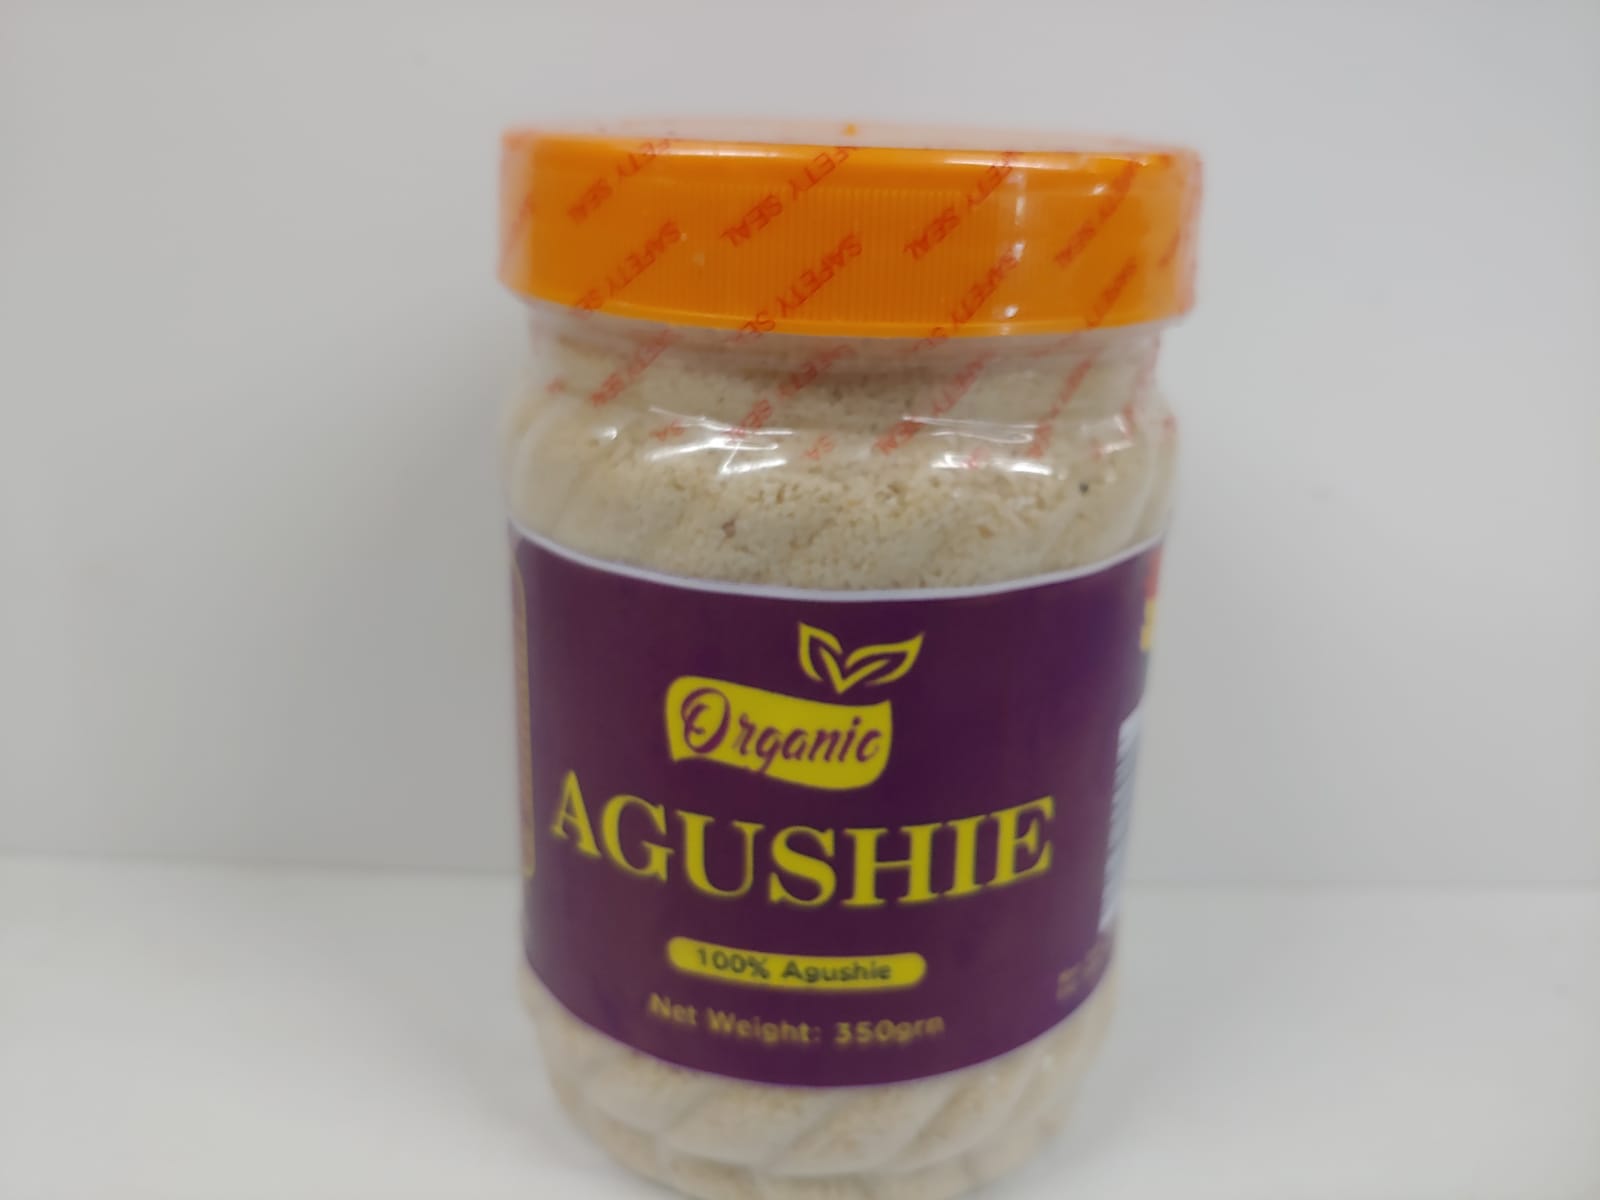 Organic Agushie